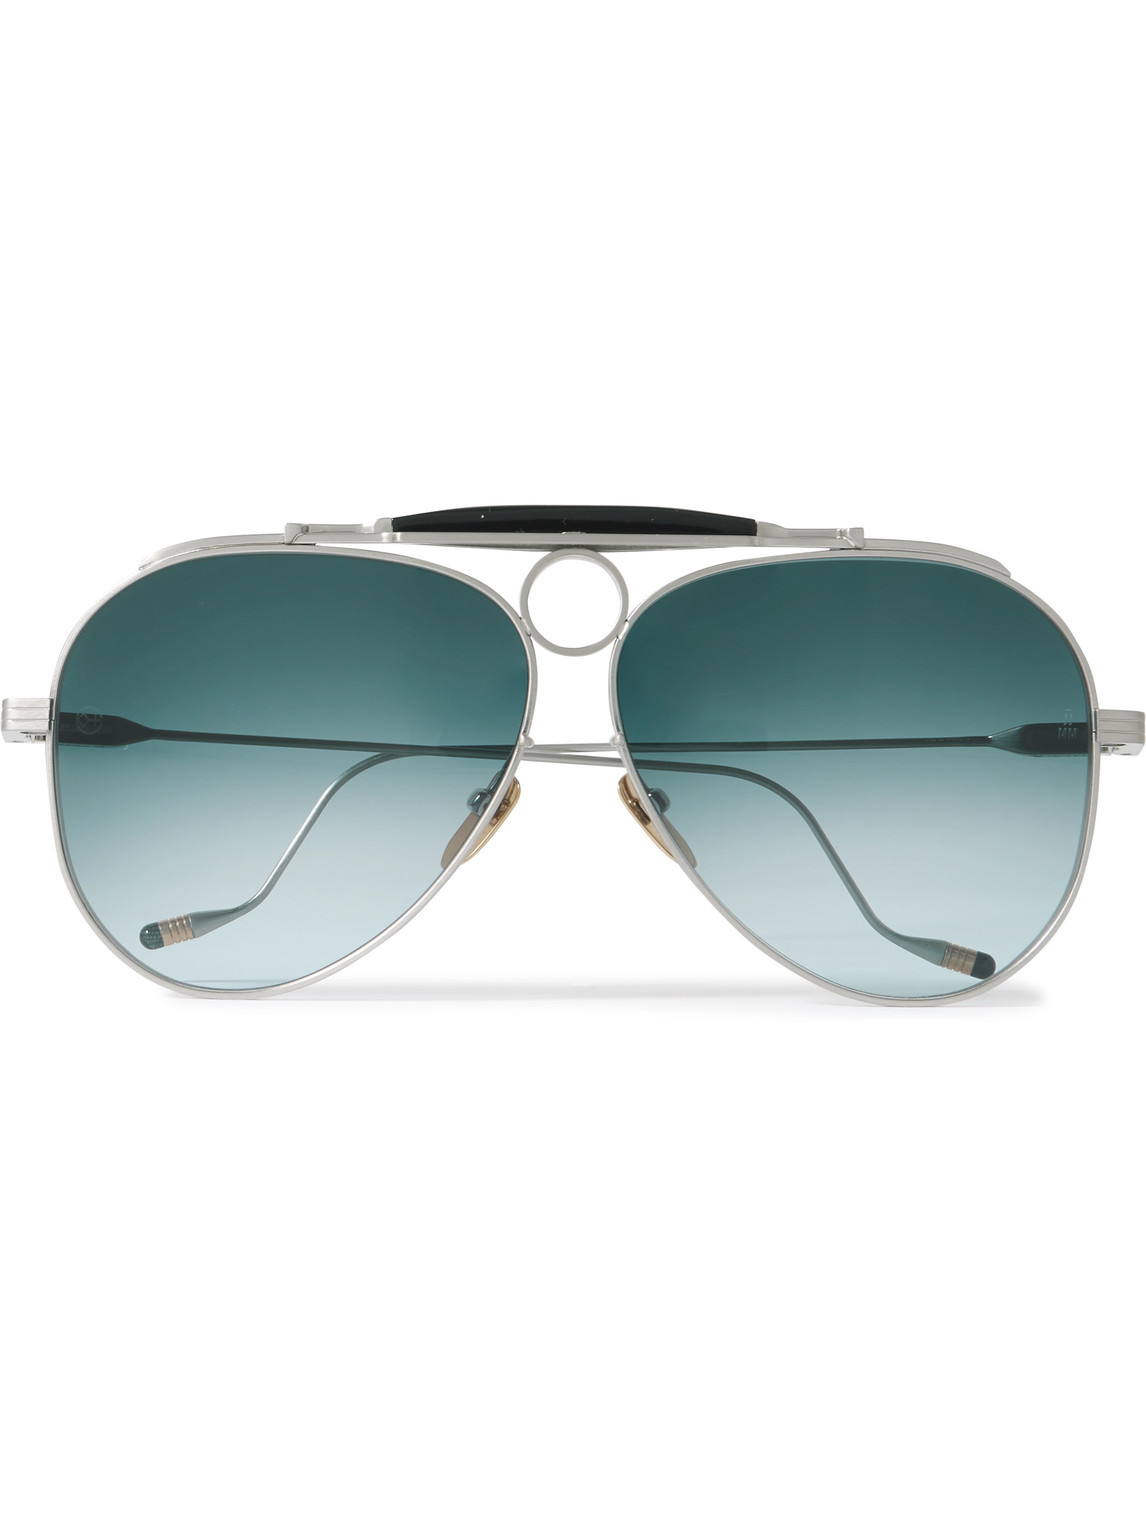 Jacques Marie Mage Diamond Cross Ranch Aviator-style Silver-tone Sunglasses